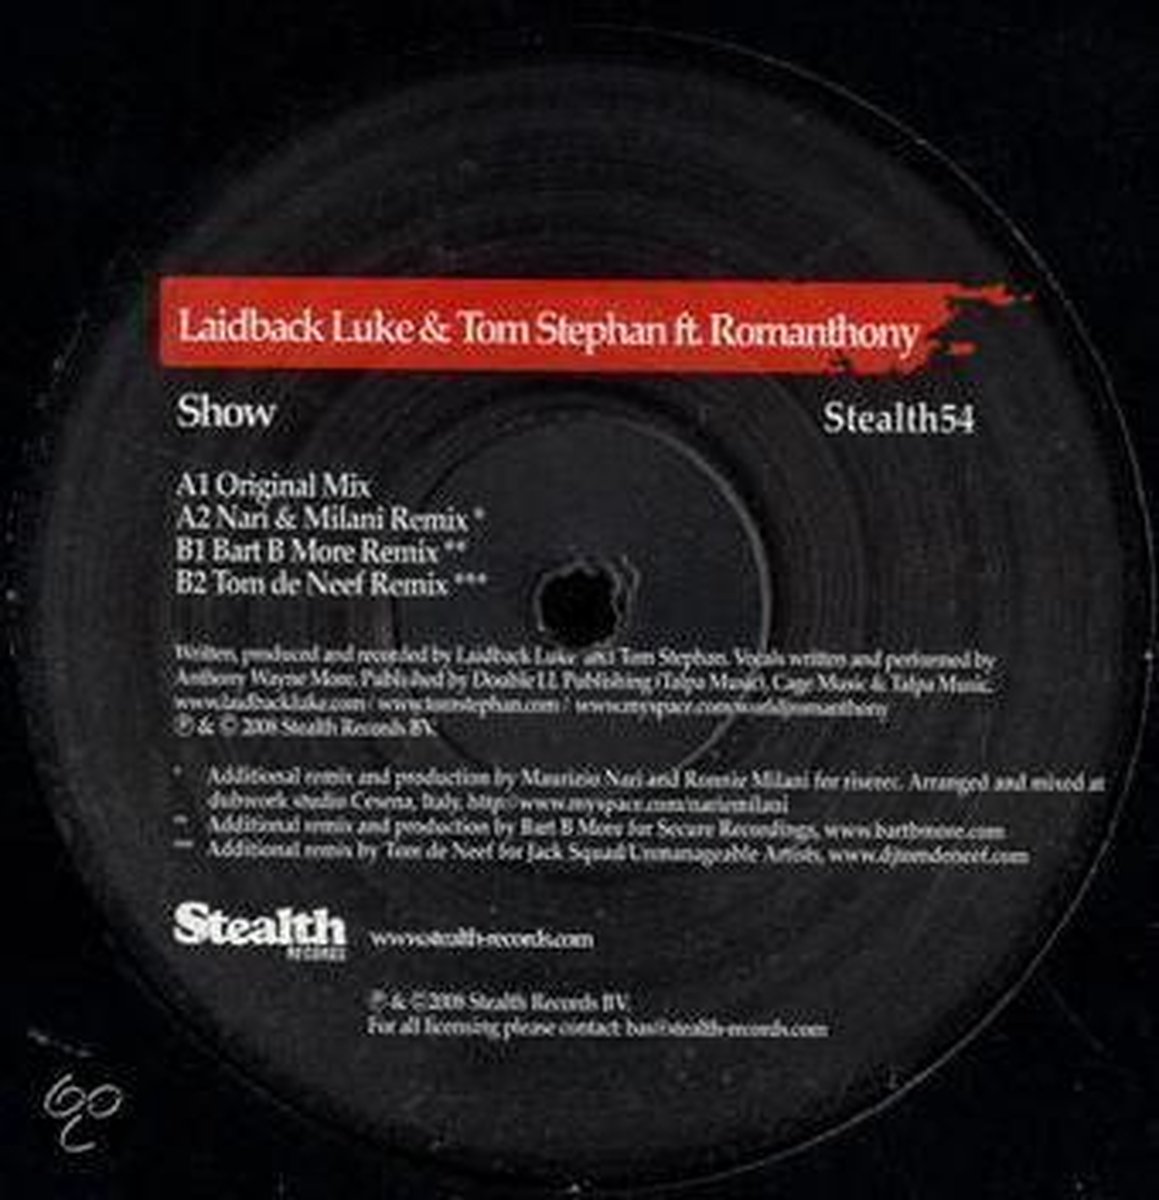 Show - Laidback Luke